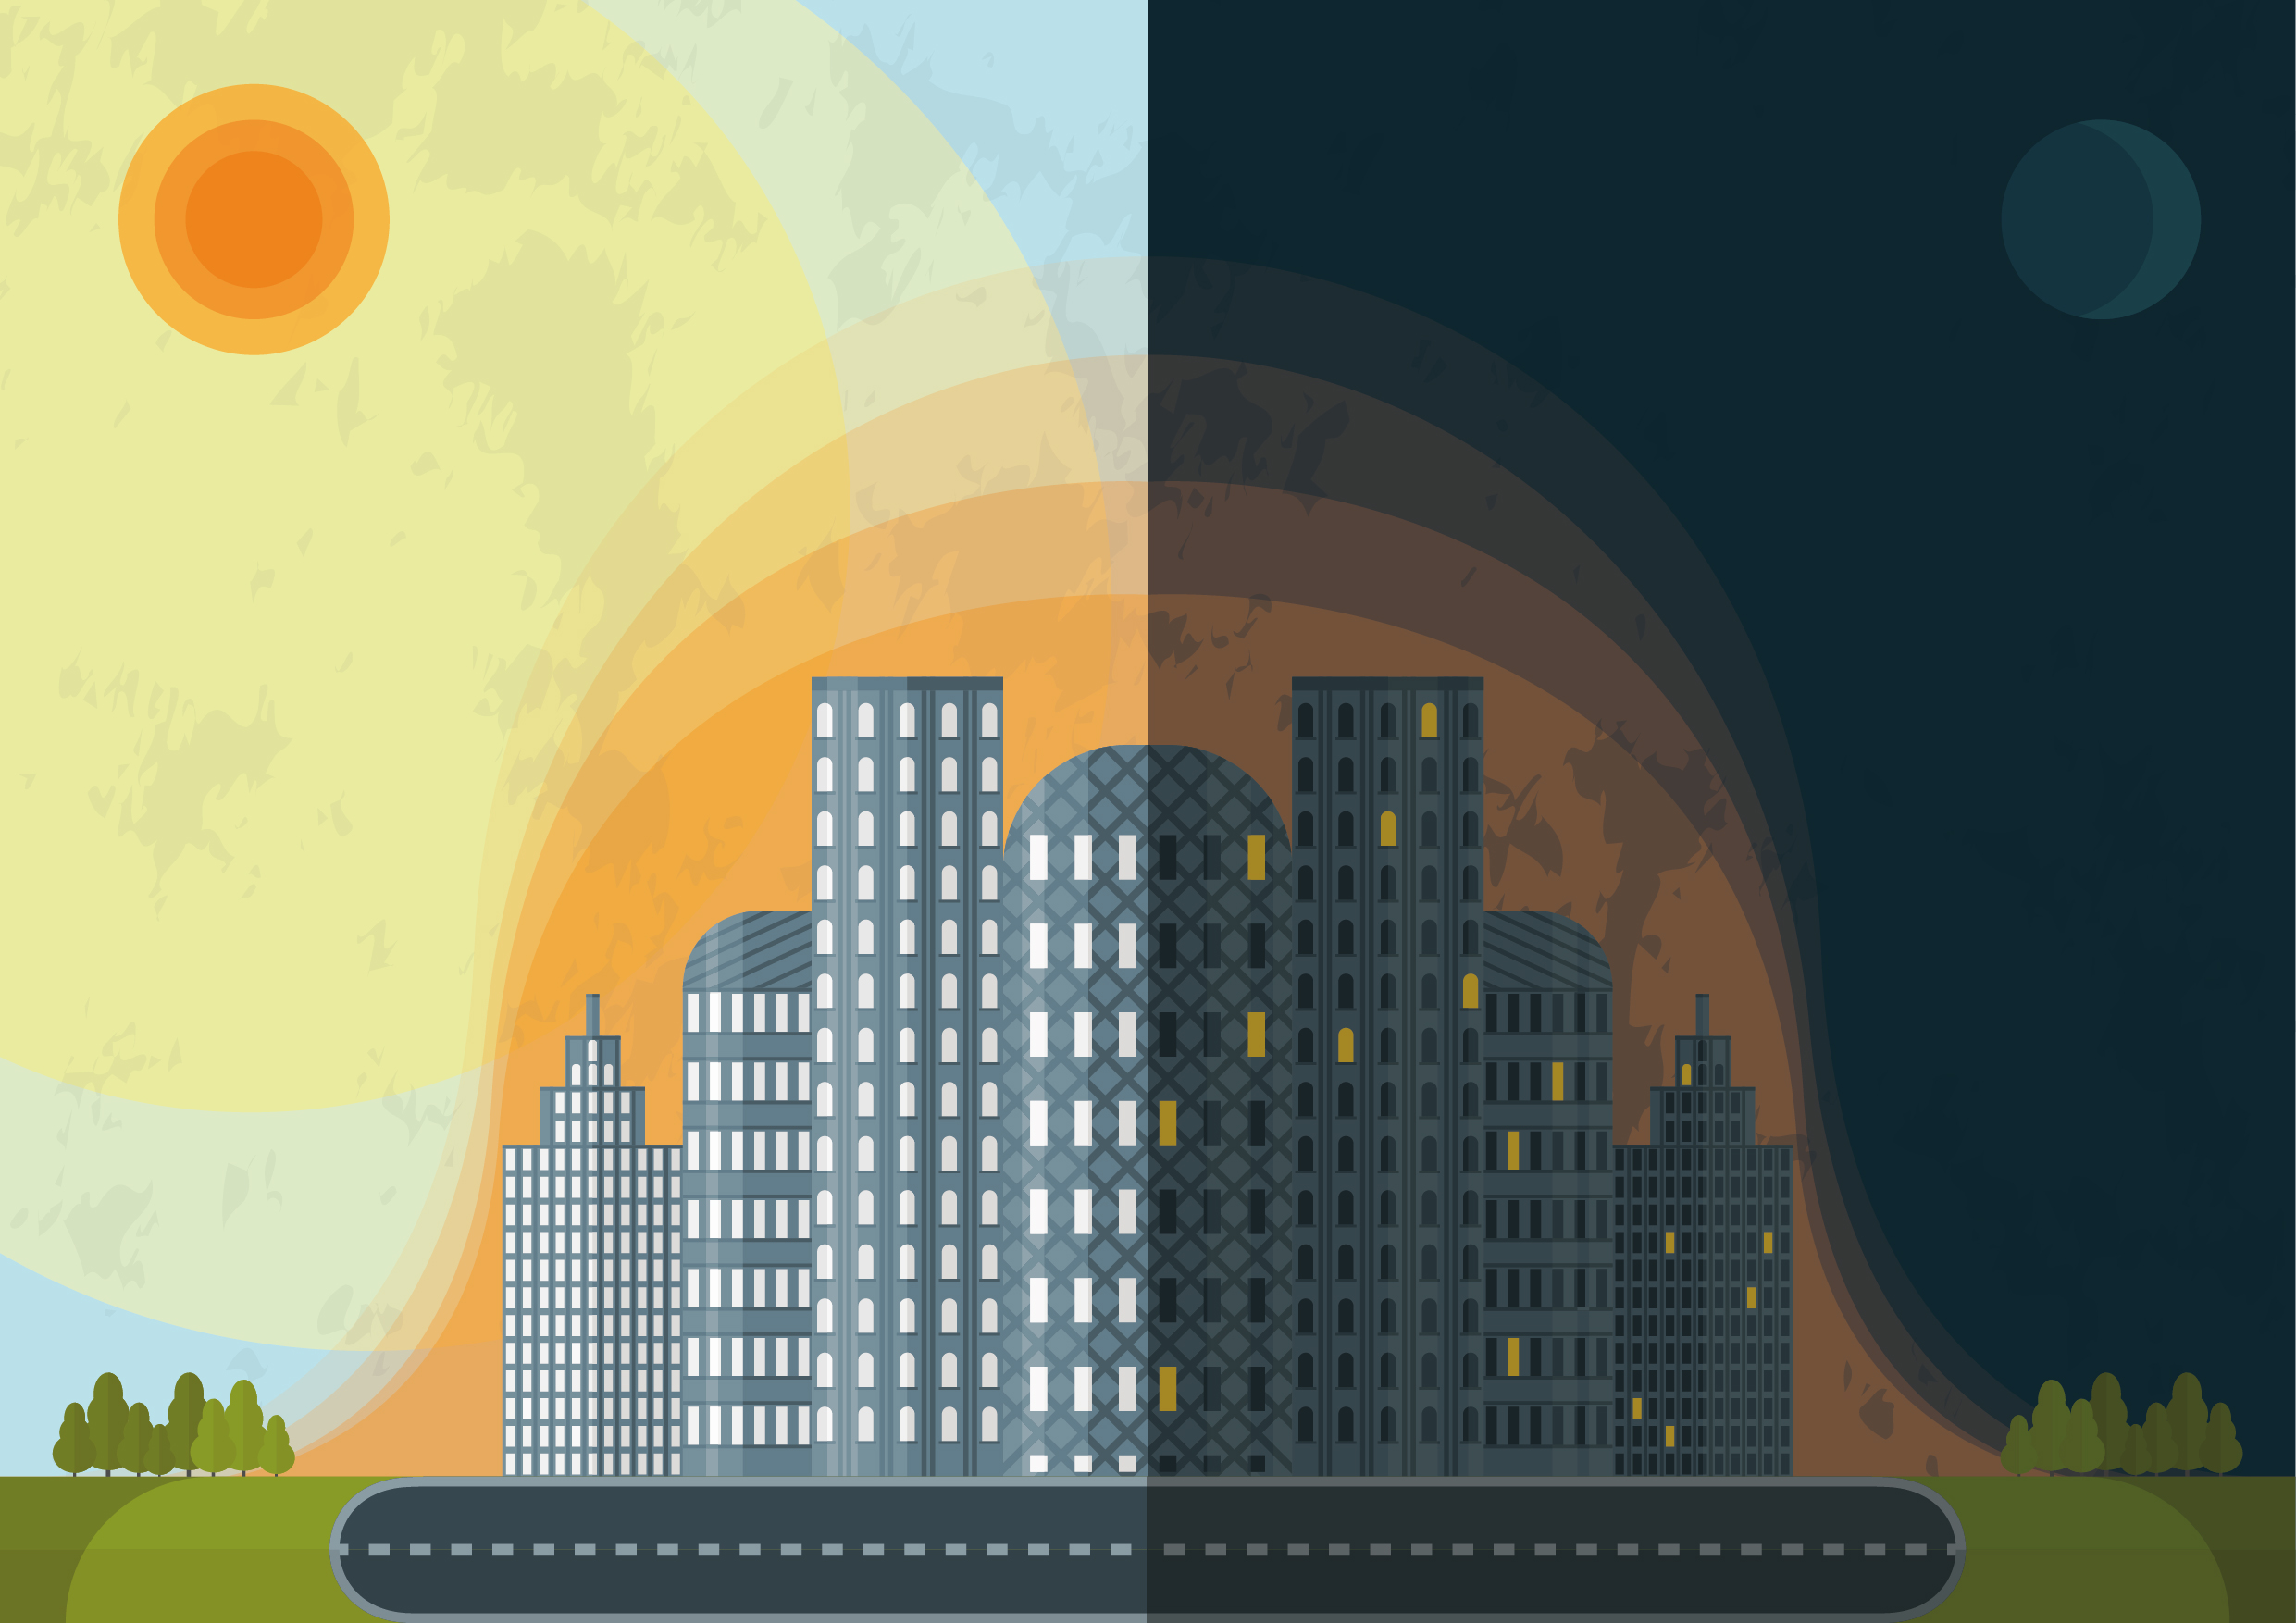 Graphic illustration of the urban heat island effect